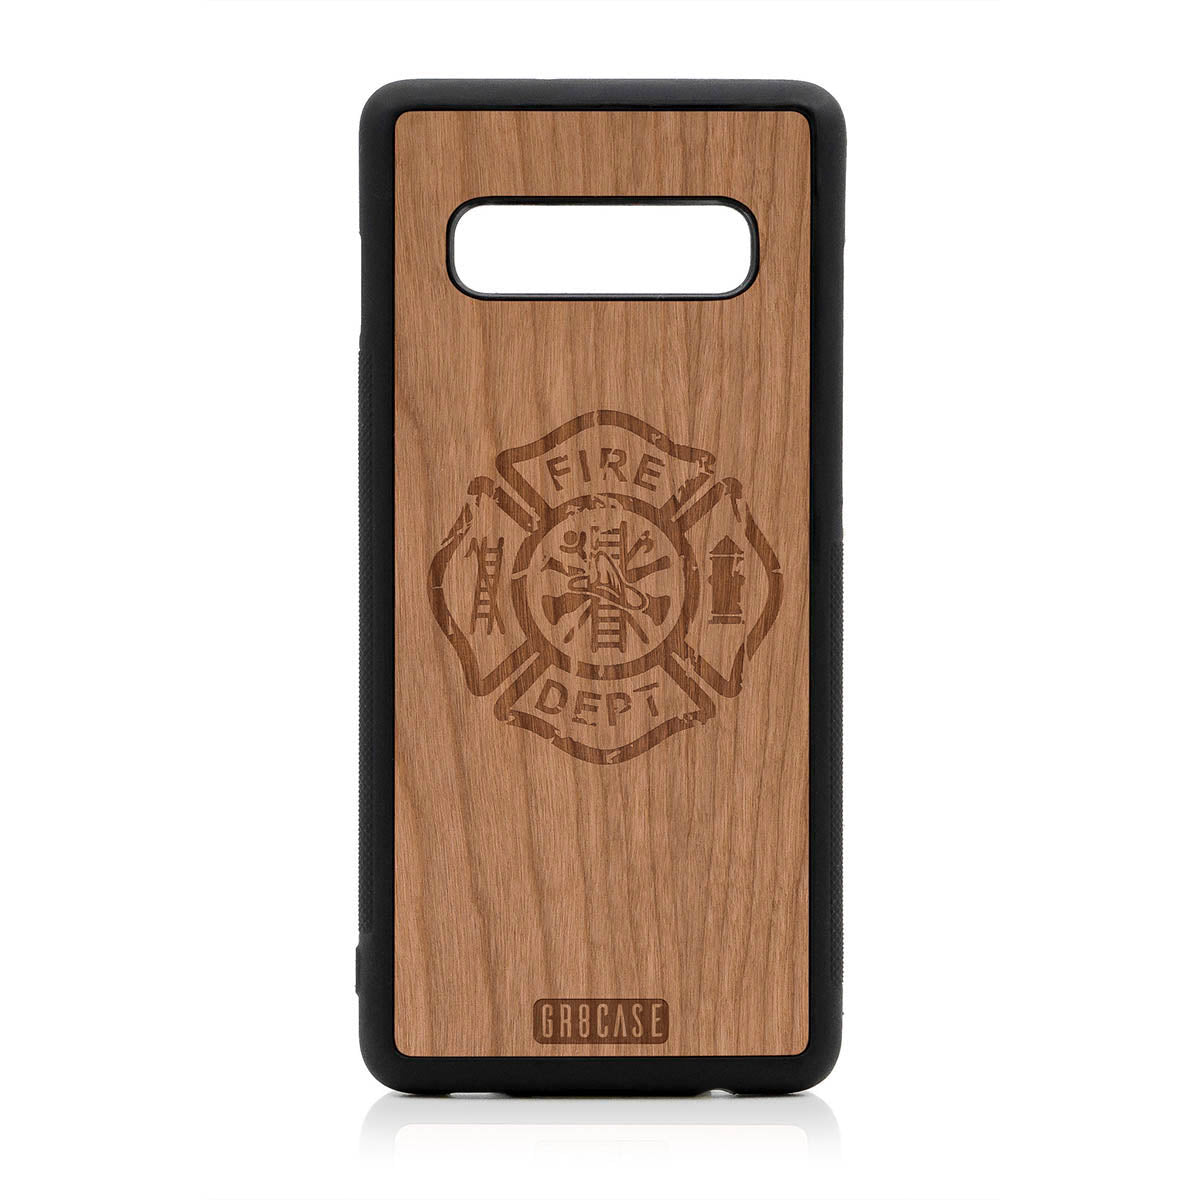 Fire Department Design Wood Case Samsung Galaxy S10 Plus by GR8CASE